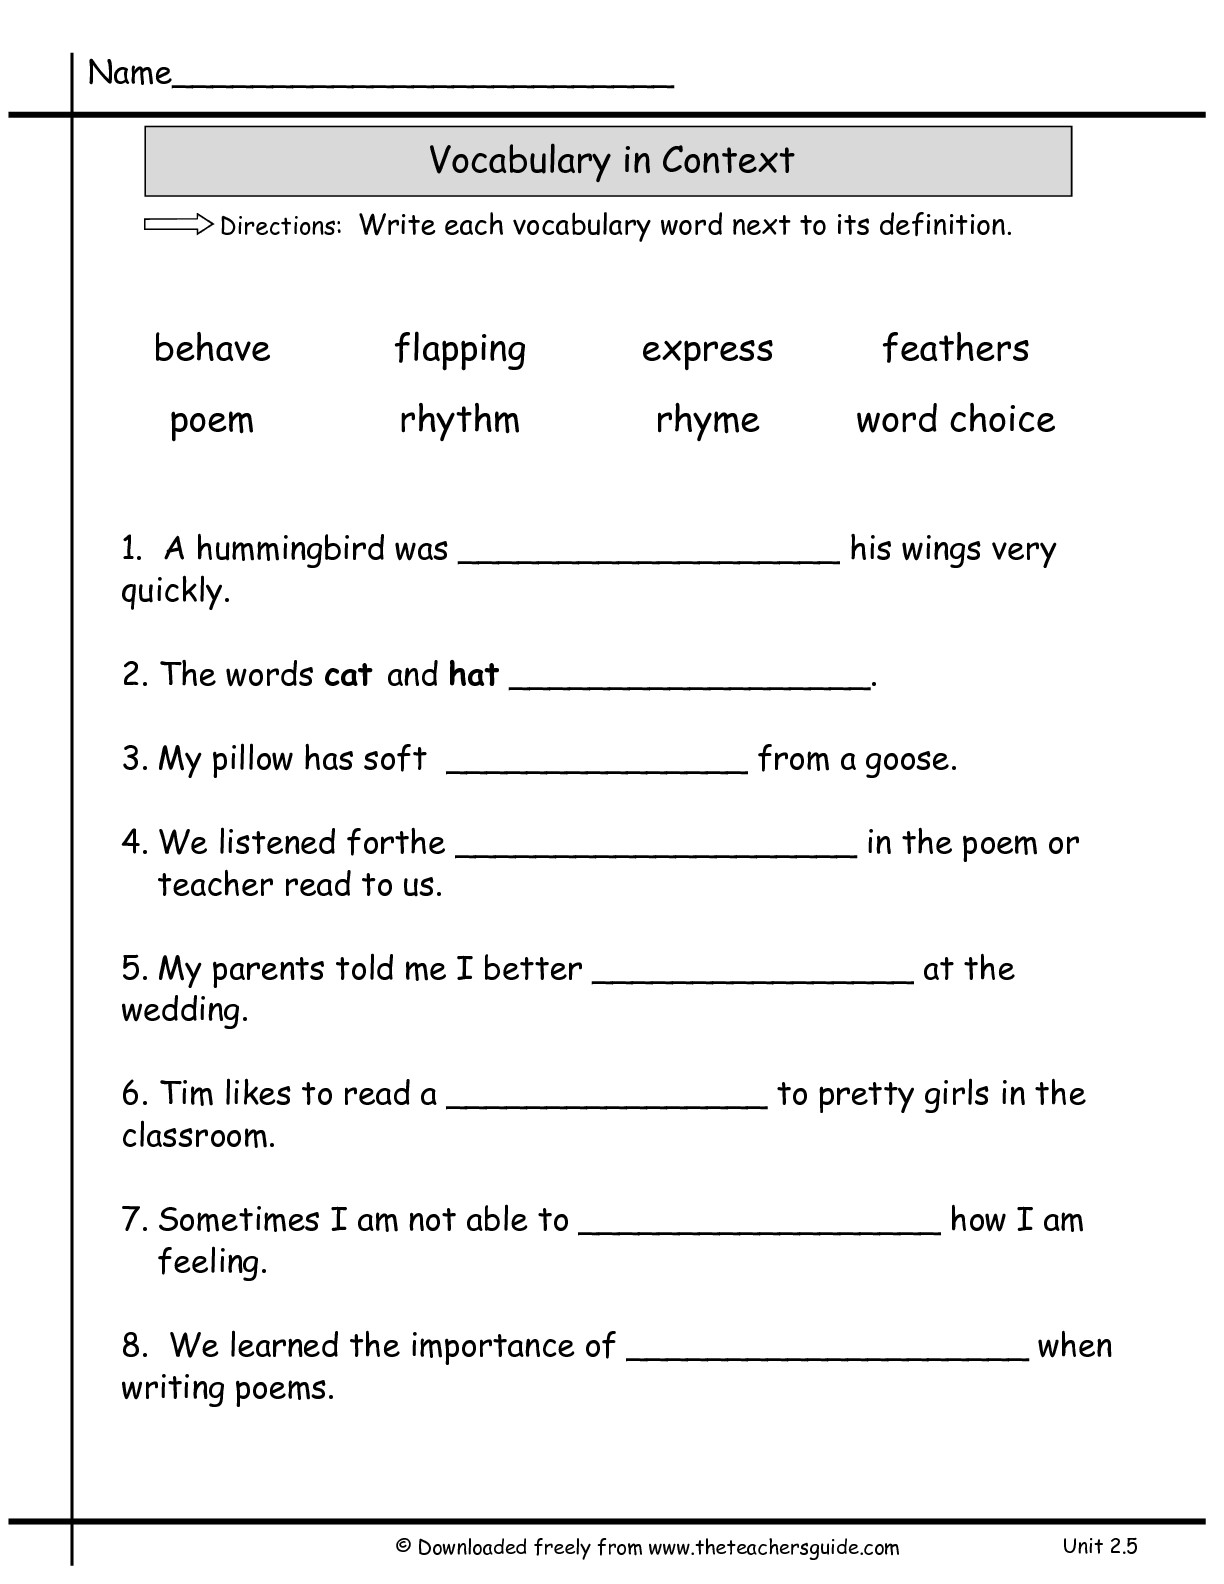 blasting-off-with-verbs-verb-worksheets-2nd-grade-worksheets-2nd-grade-reading-worksheets